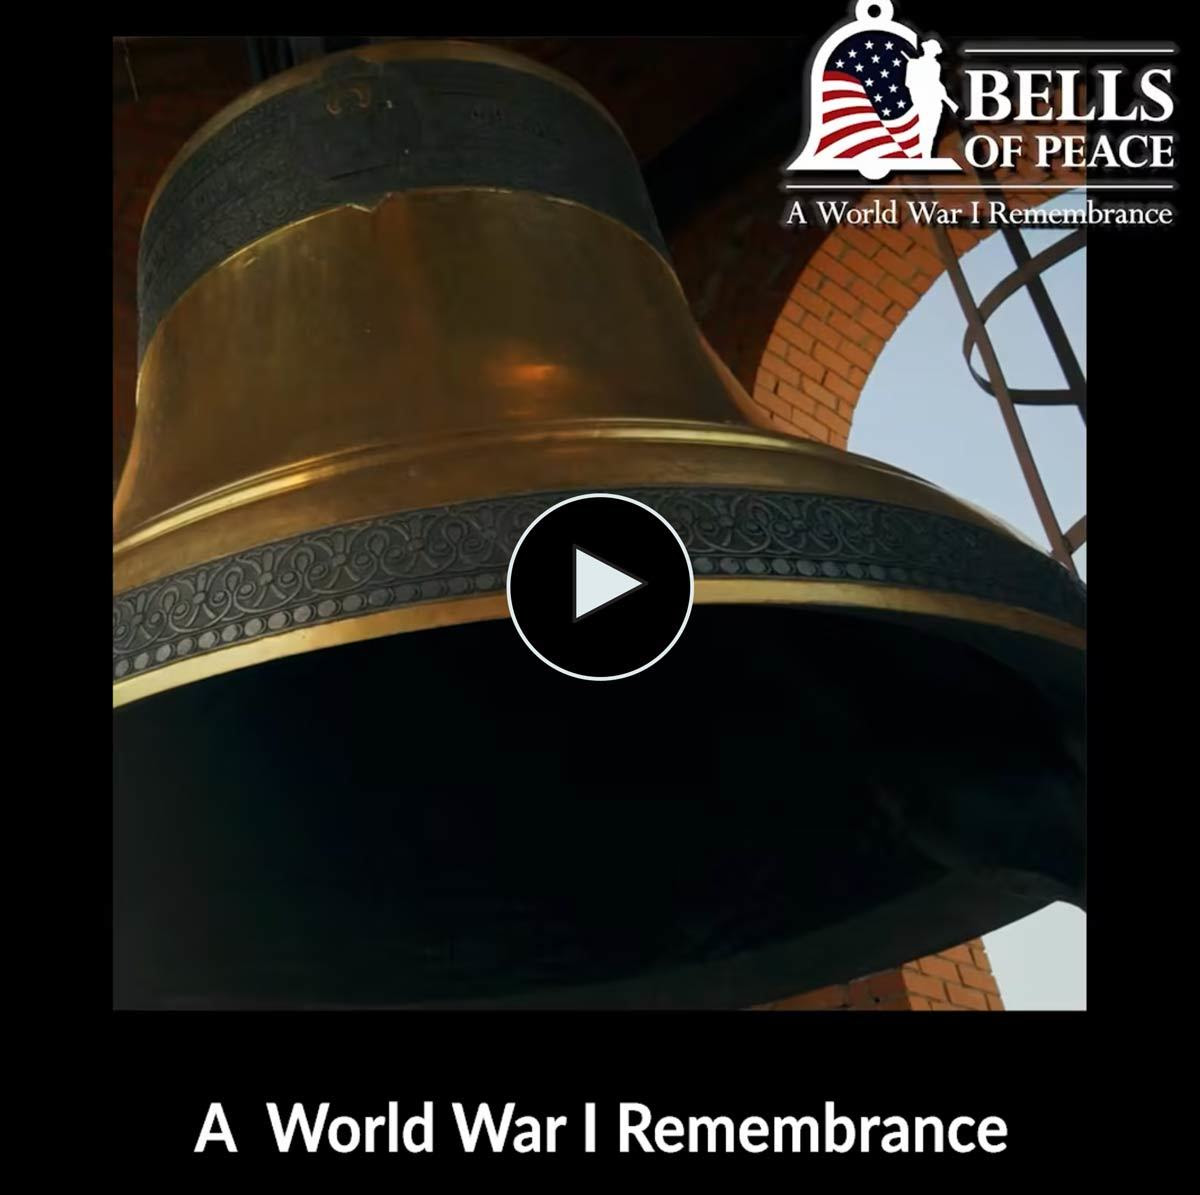 Bells of Peace promo video thumb 2021